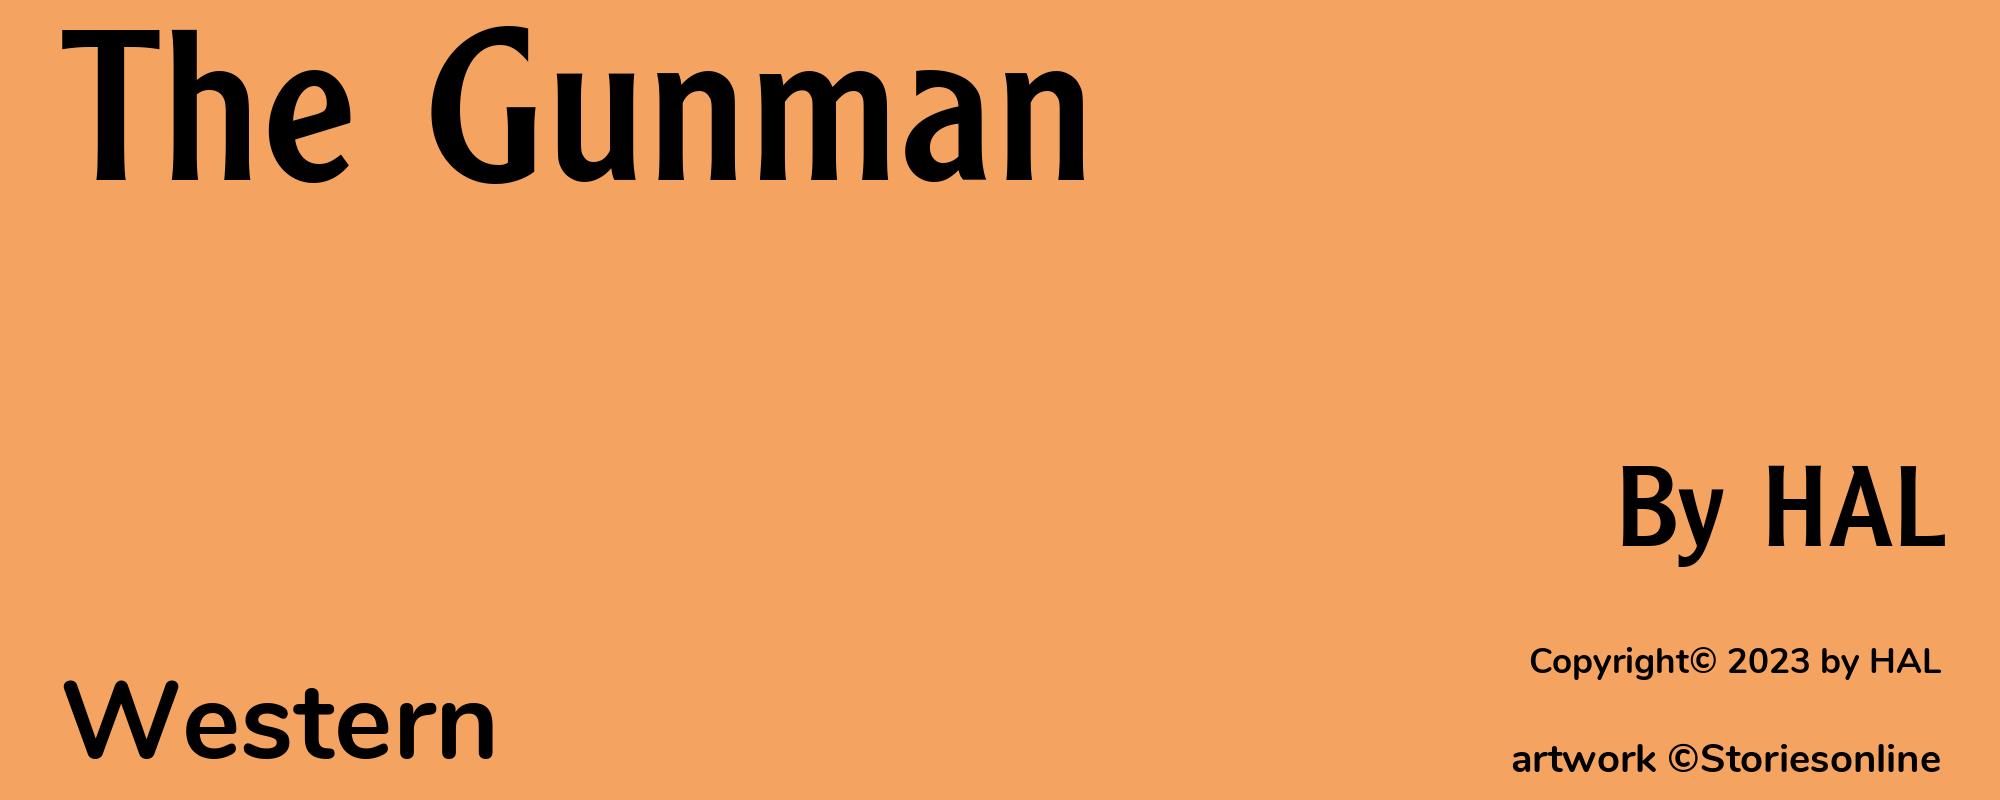 The Gunman - Cover